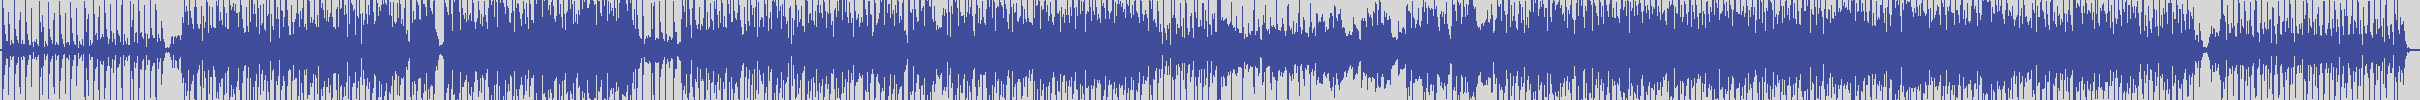 smilax_productions [SPMOL014] Dr. Feelx, Domenico Ciaffone - Agua Pasada [Acoustic] audio wave form